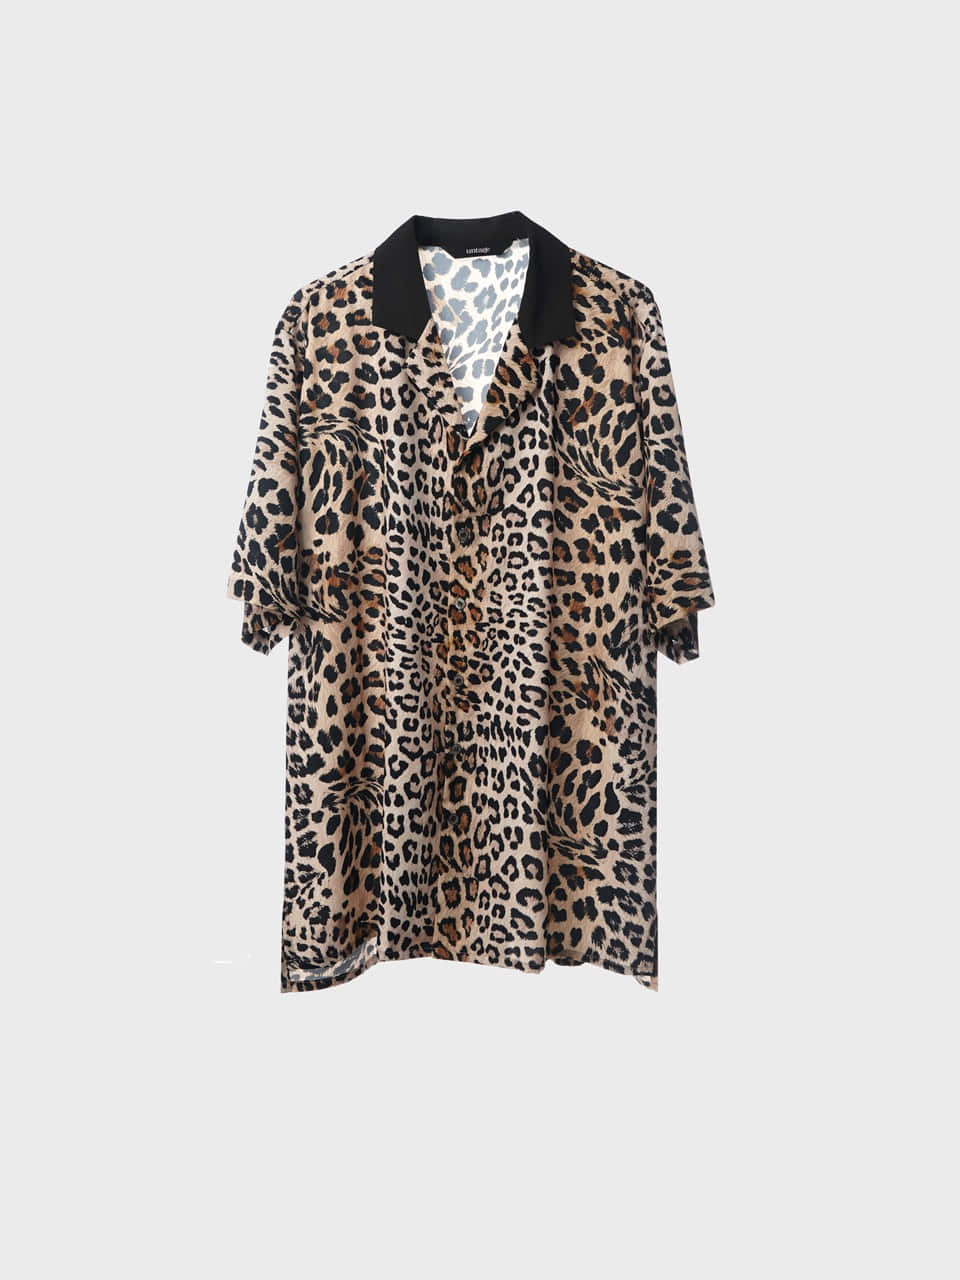 Amur Leopard Half Shirts